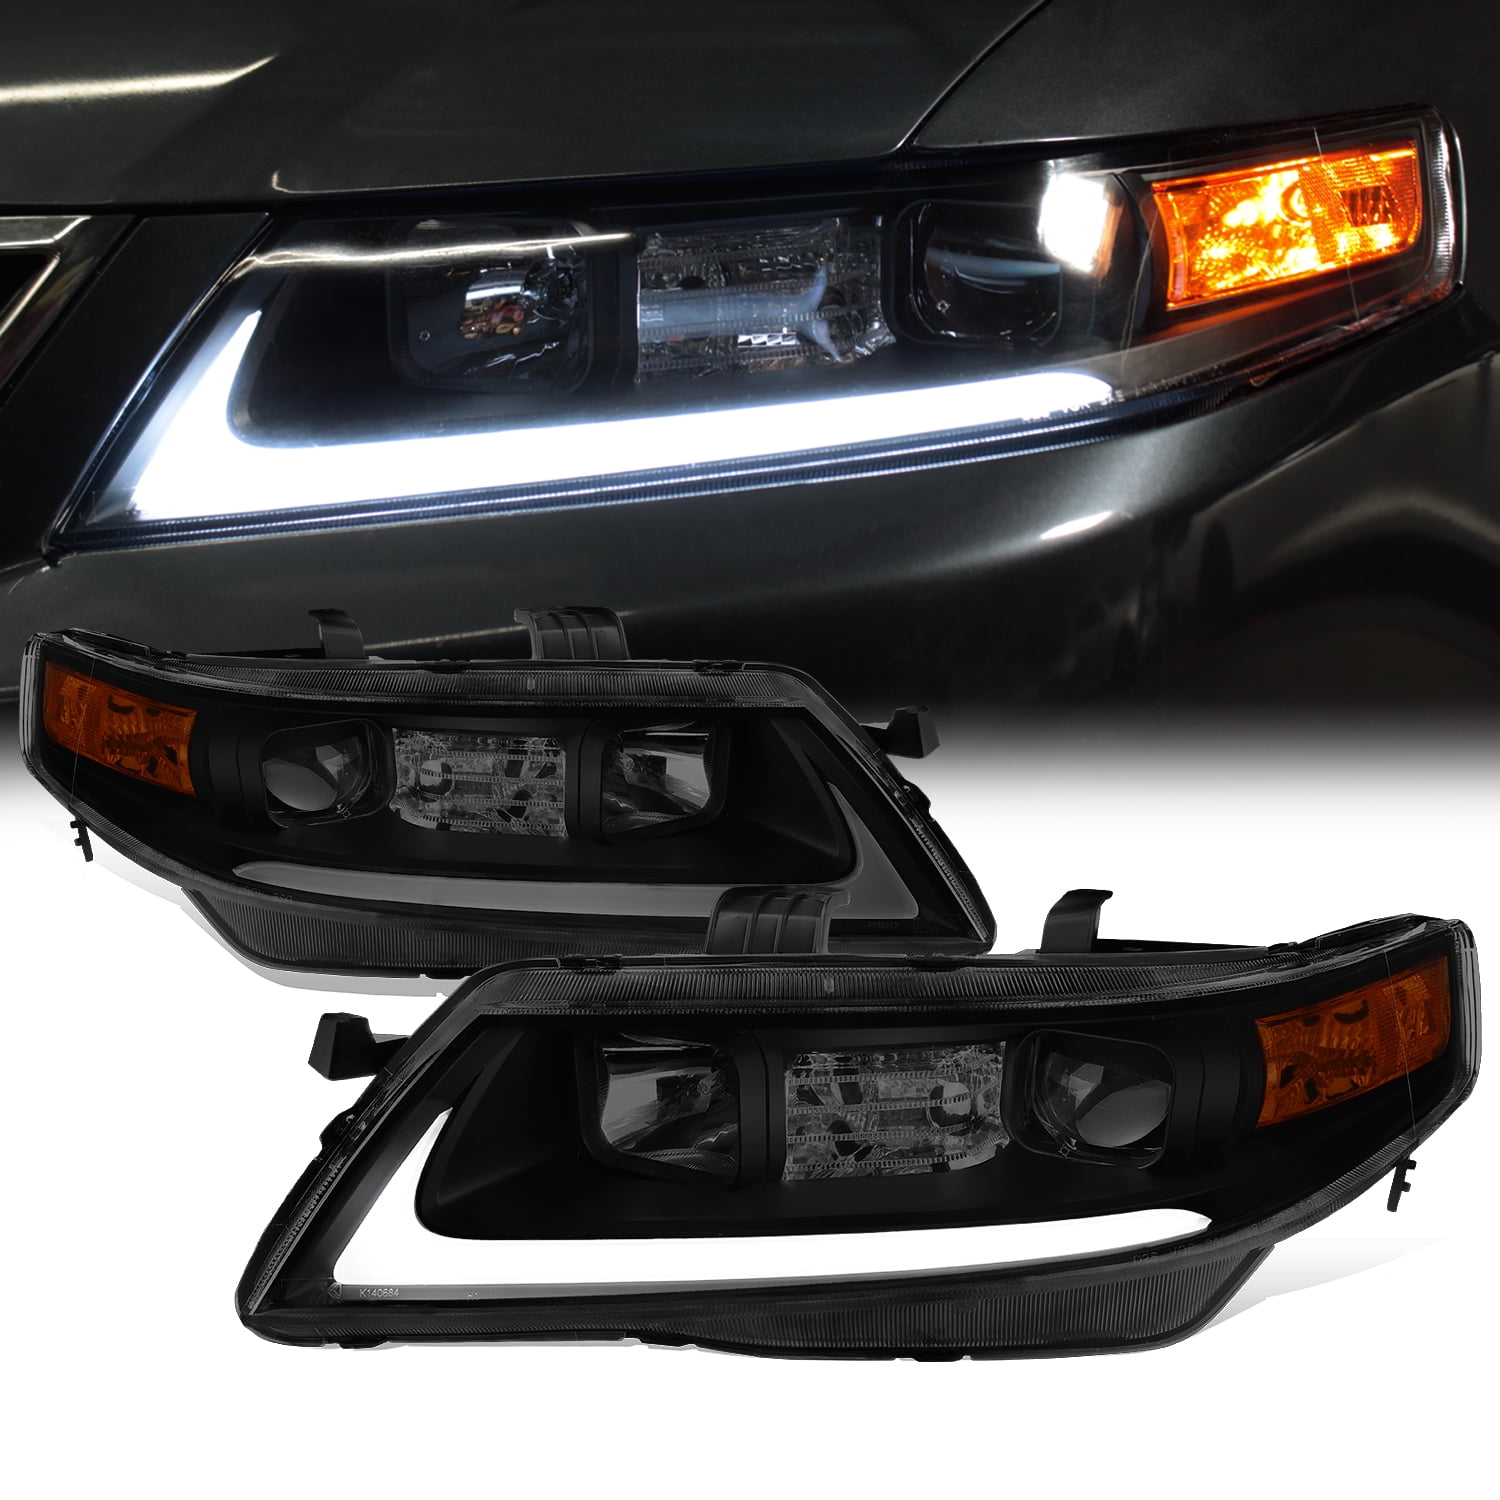 38 HQ Images Smoked Cat Eye Headlights : Led Headlight Fog Light Upgrade Lbz Chevy And Gmc Duramax Diesel Forum